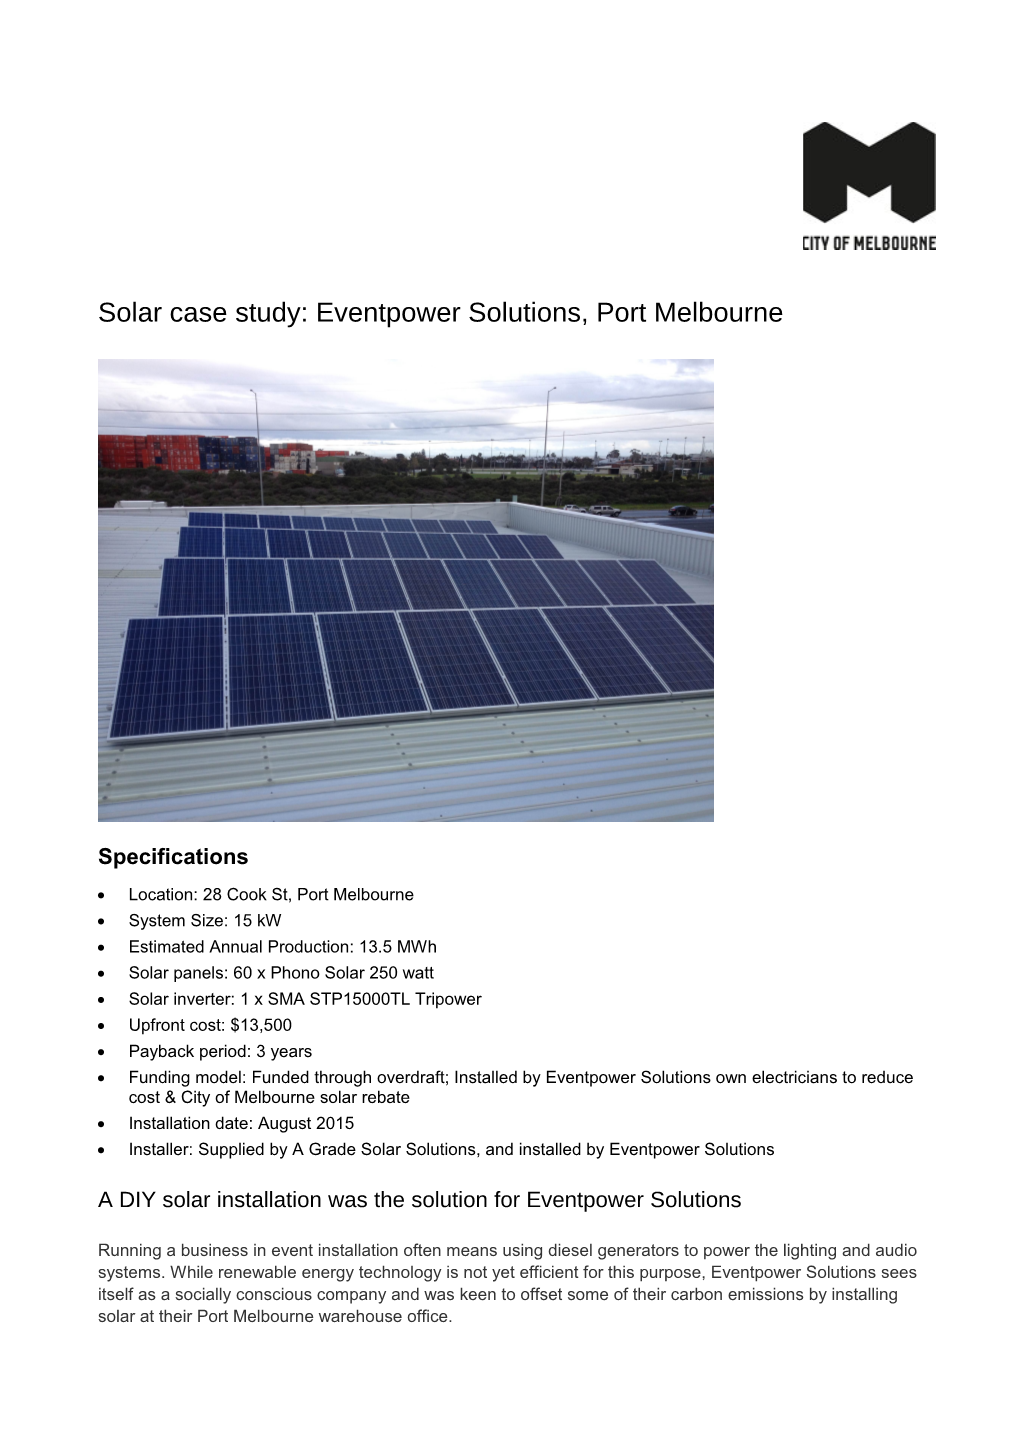 Solar Case Study: Eventpower Solutions, Port Melbourne